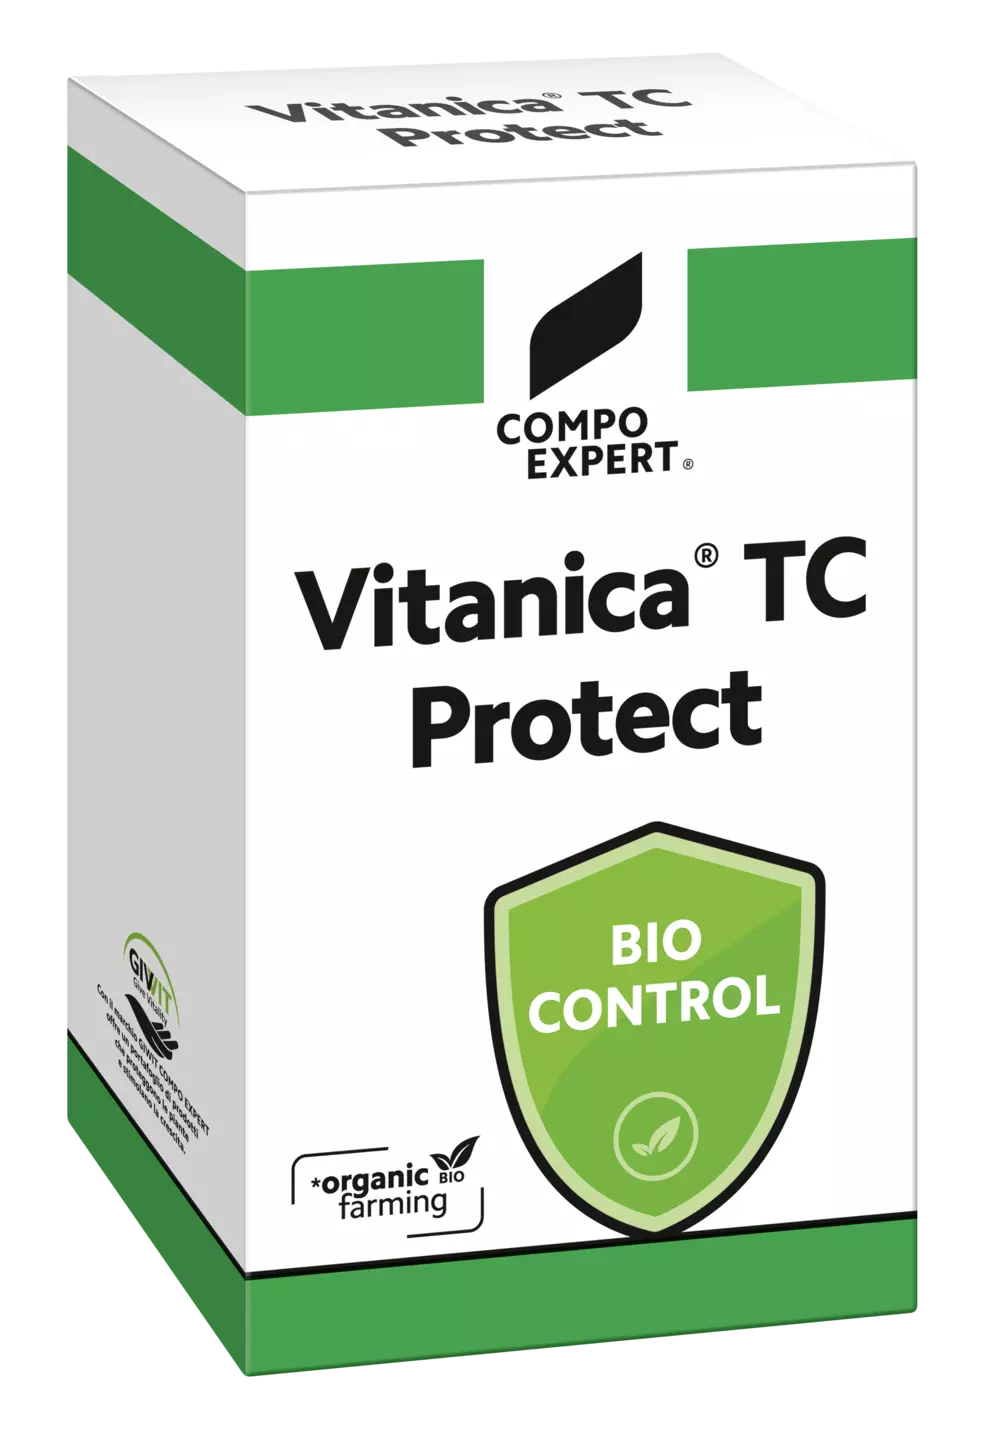 3D Vitanica TC Protect